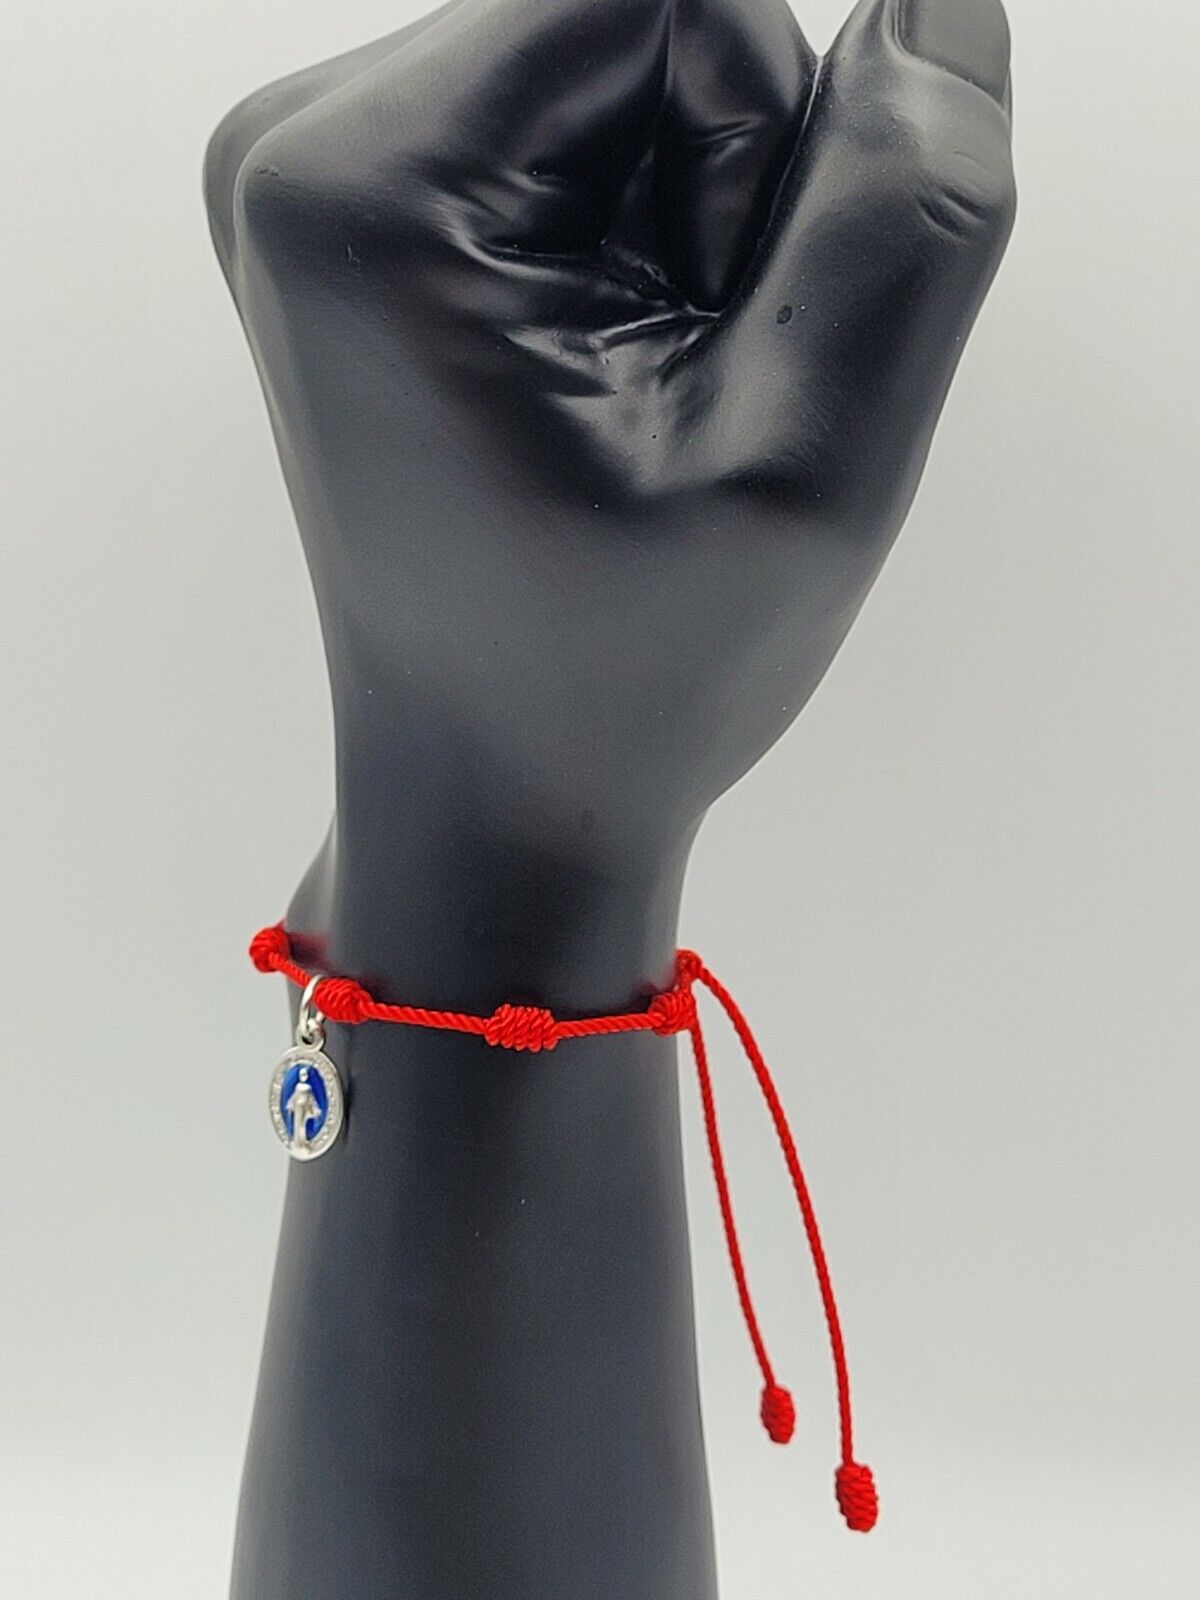 PULSERA/ROJA/DE/SIETE/NUDOS RED CORD SEVEN Knots BRACELET khaballa Protection 